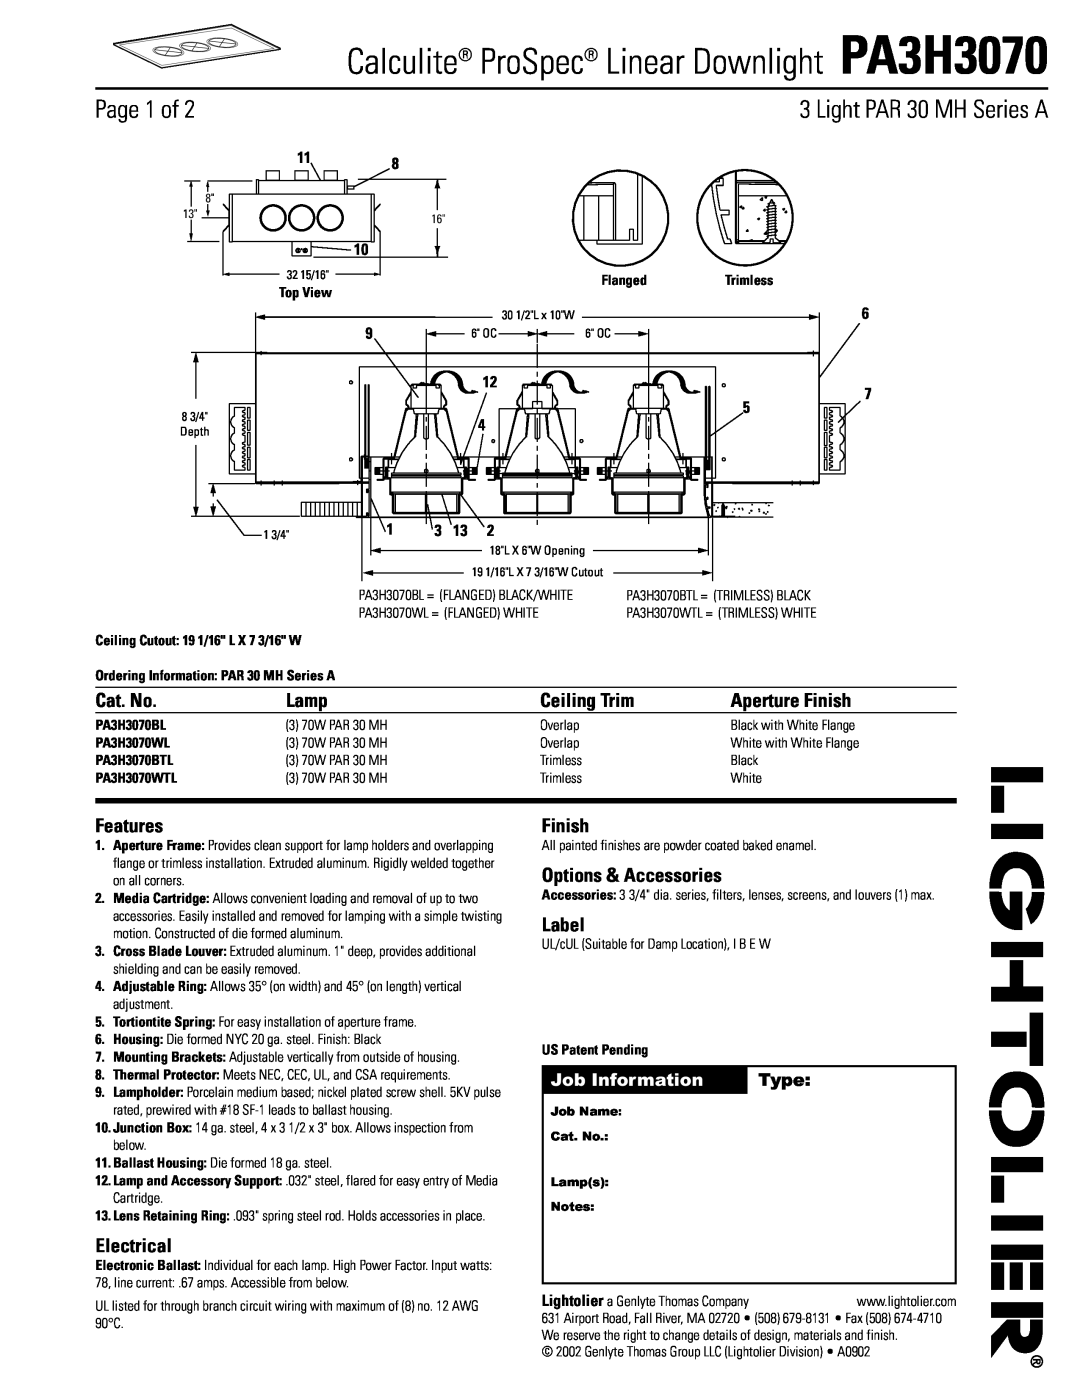 Lightolier PA3H3070 manual Page 1 of, Light PAR 30 MH Series A, Cat. No, Lamp, Ceiling Trim, Aperture Finish, Features 